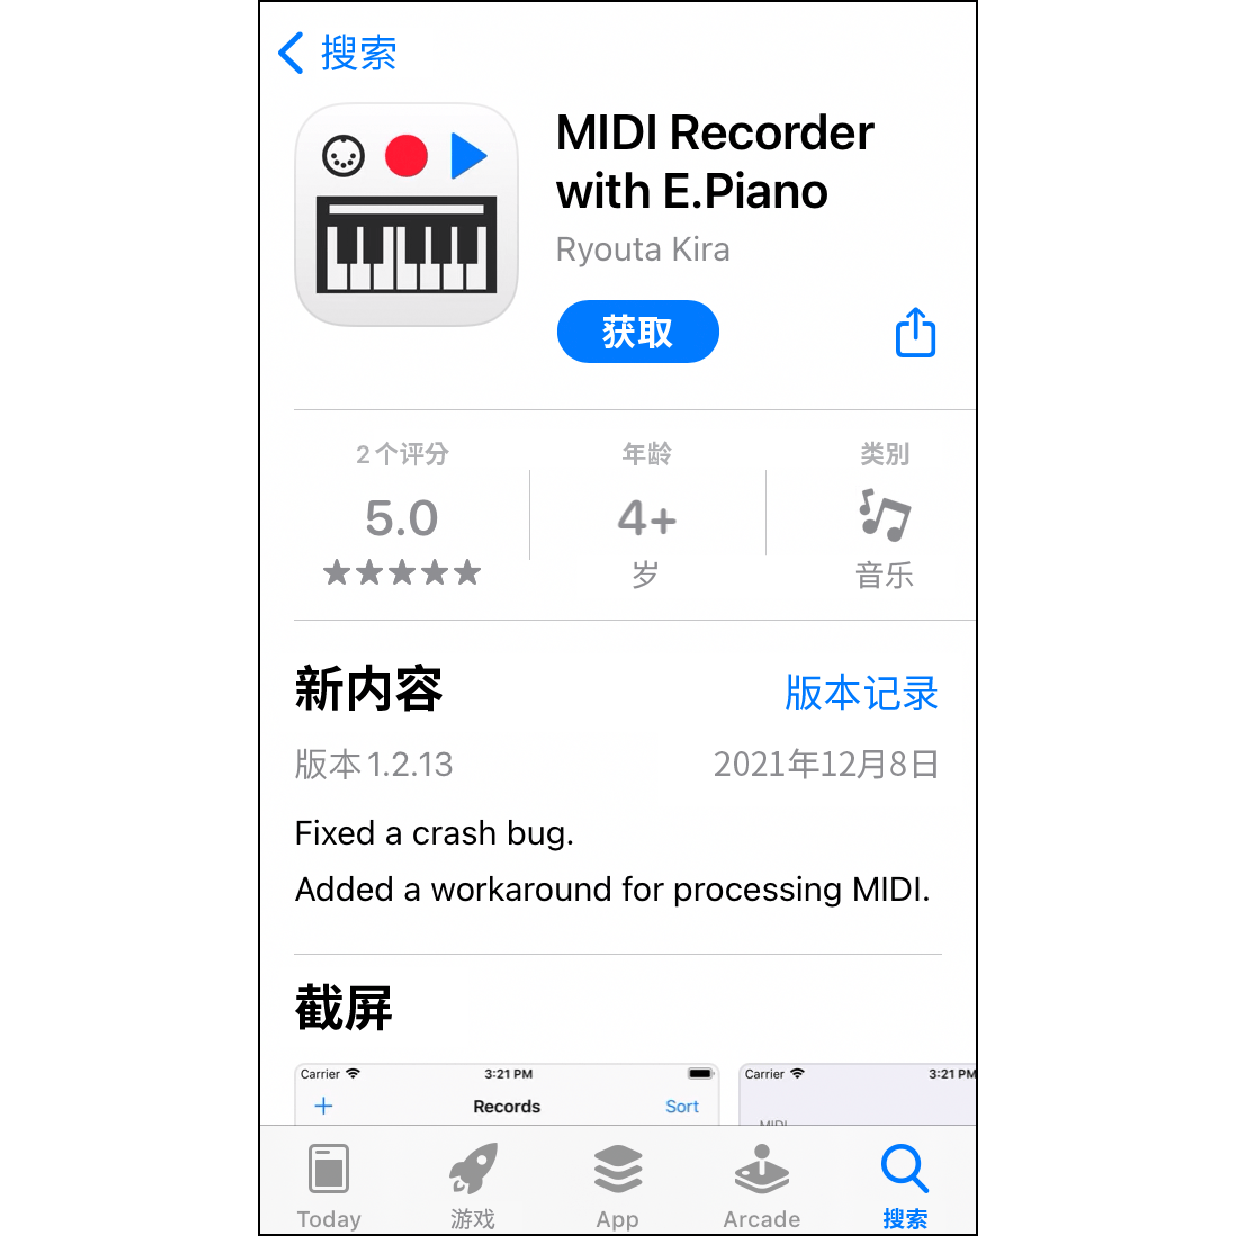 1. 安装应用程序 在App Store中搜寻并安装MIDI Recorder with E.Piano。